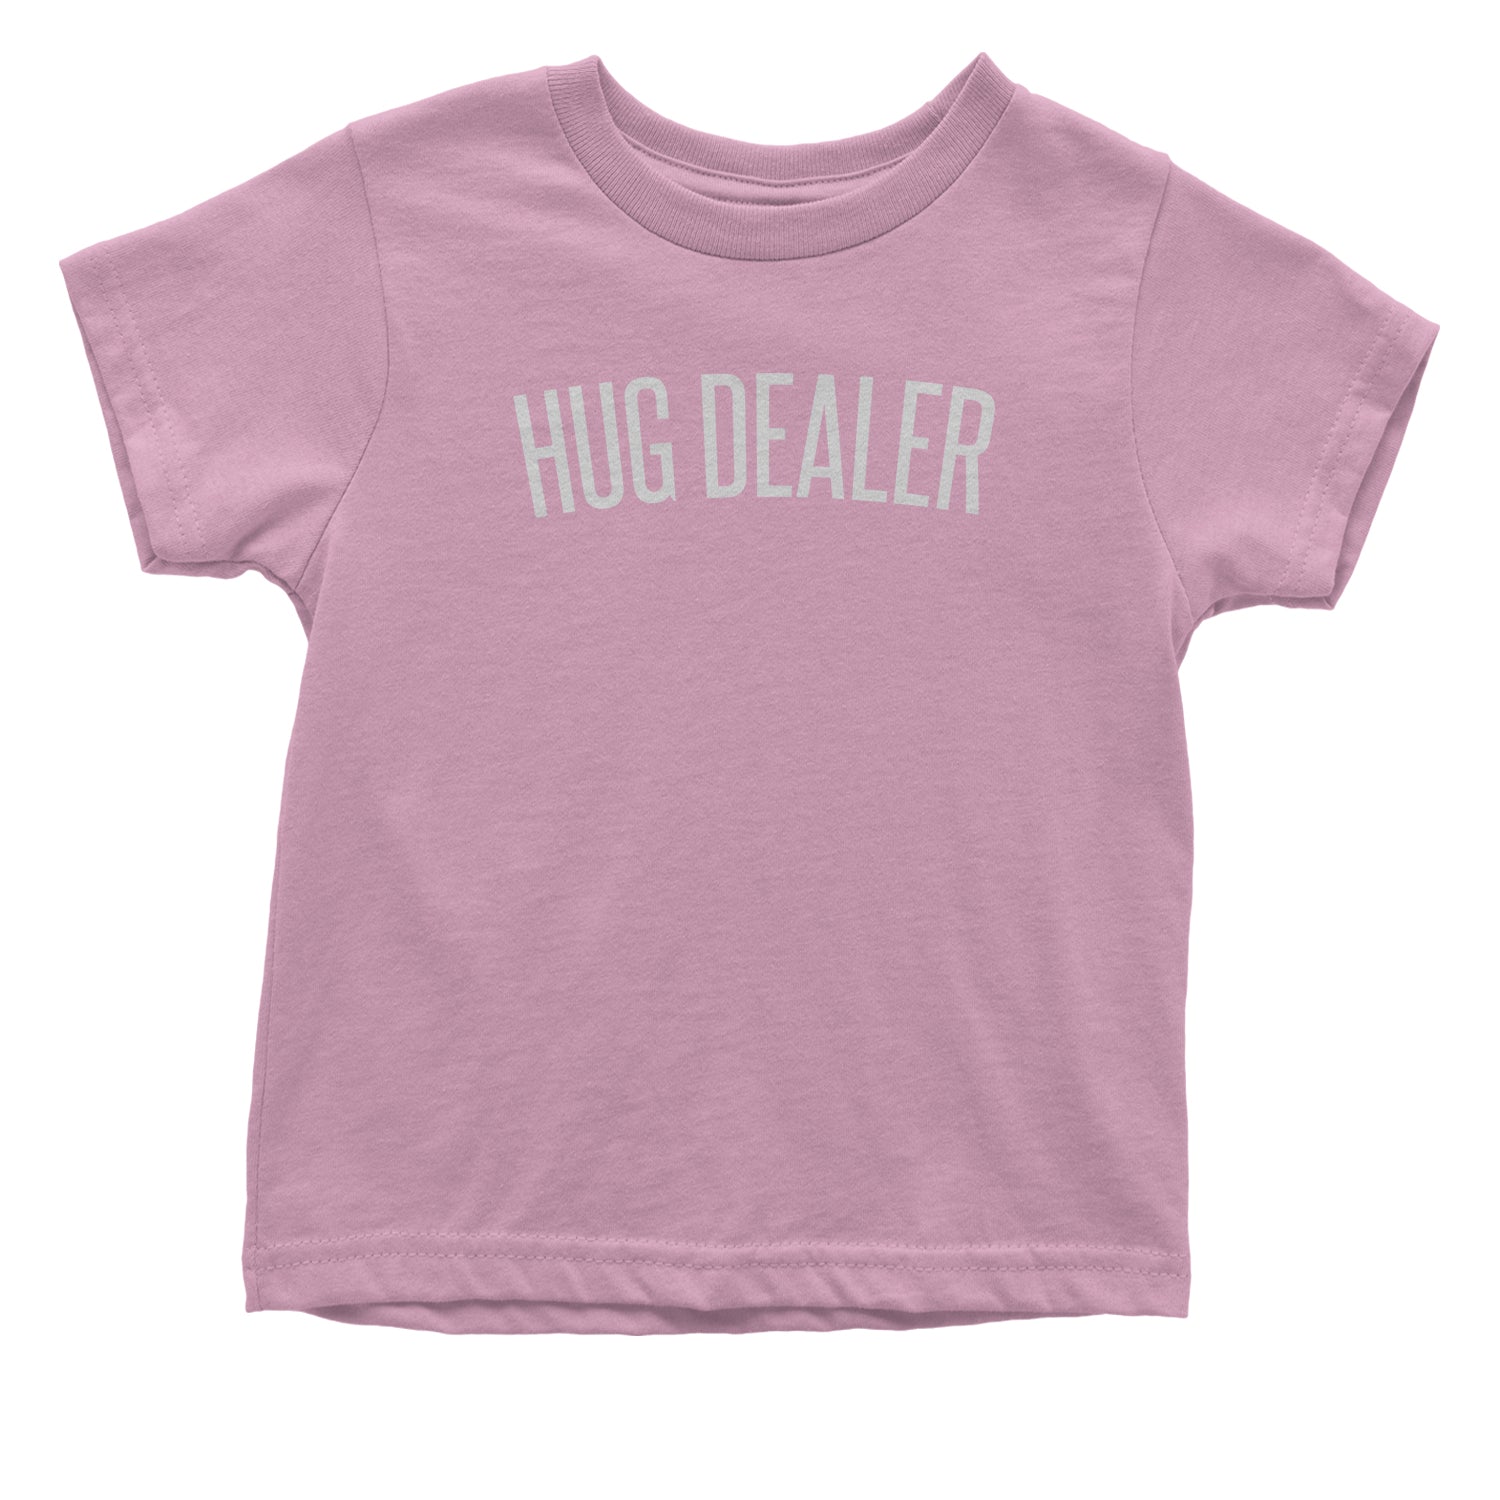 Hug Dealer Toddler T-Shirt dealing, free, hug, hugger, hugs by Expression Tees